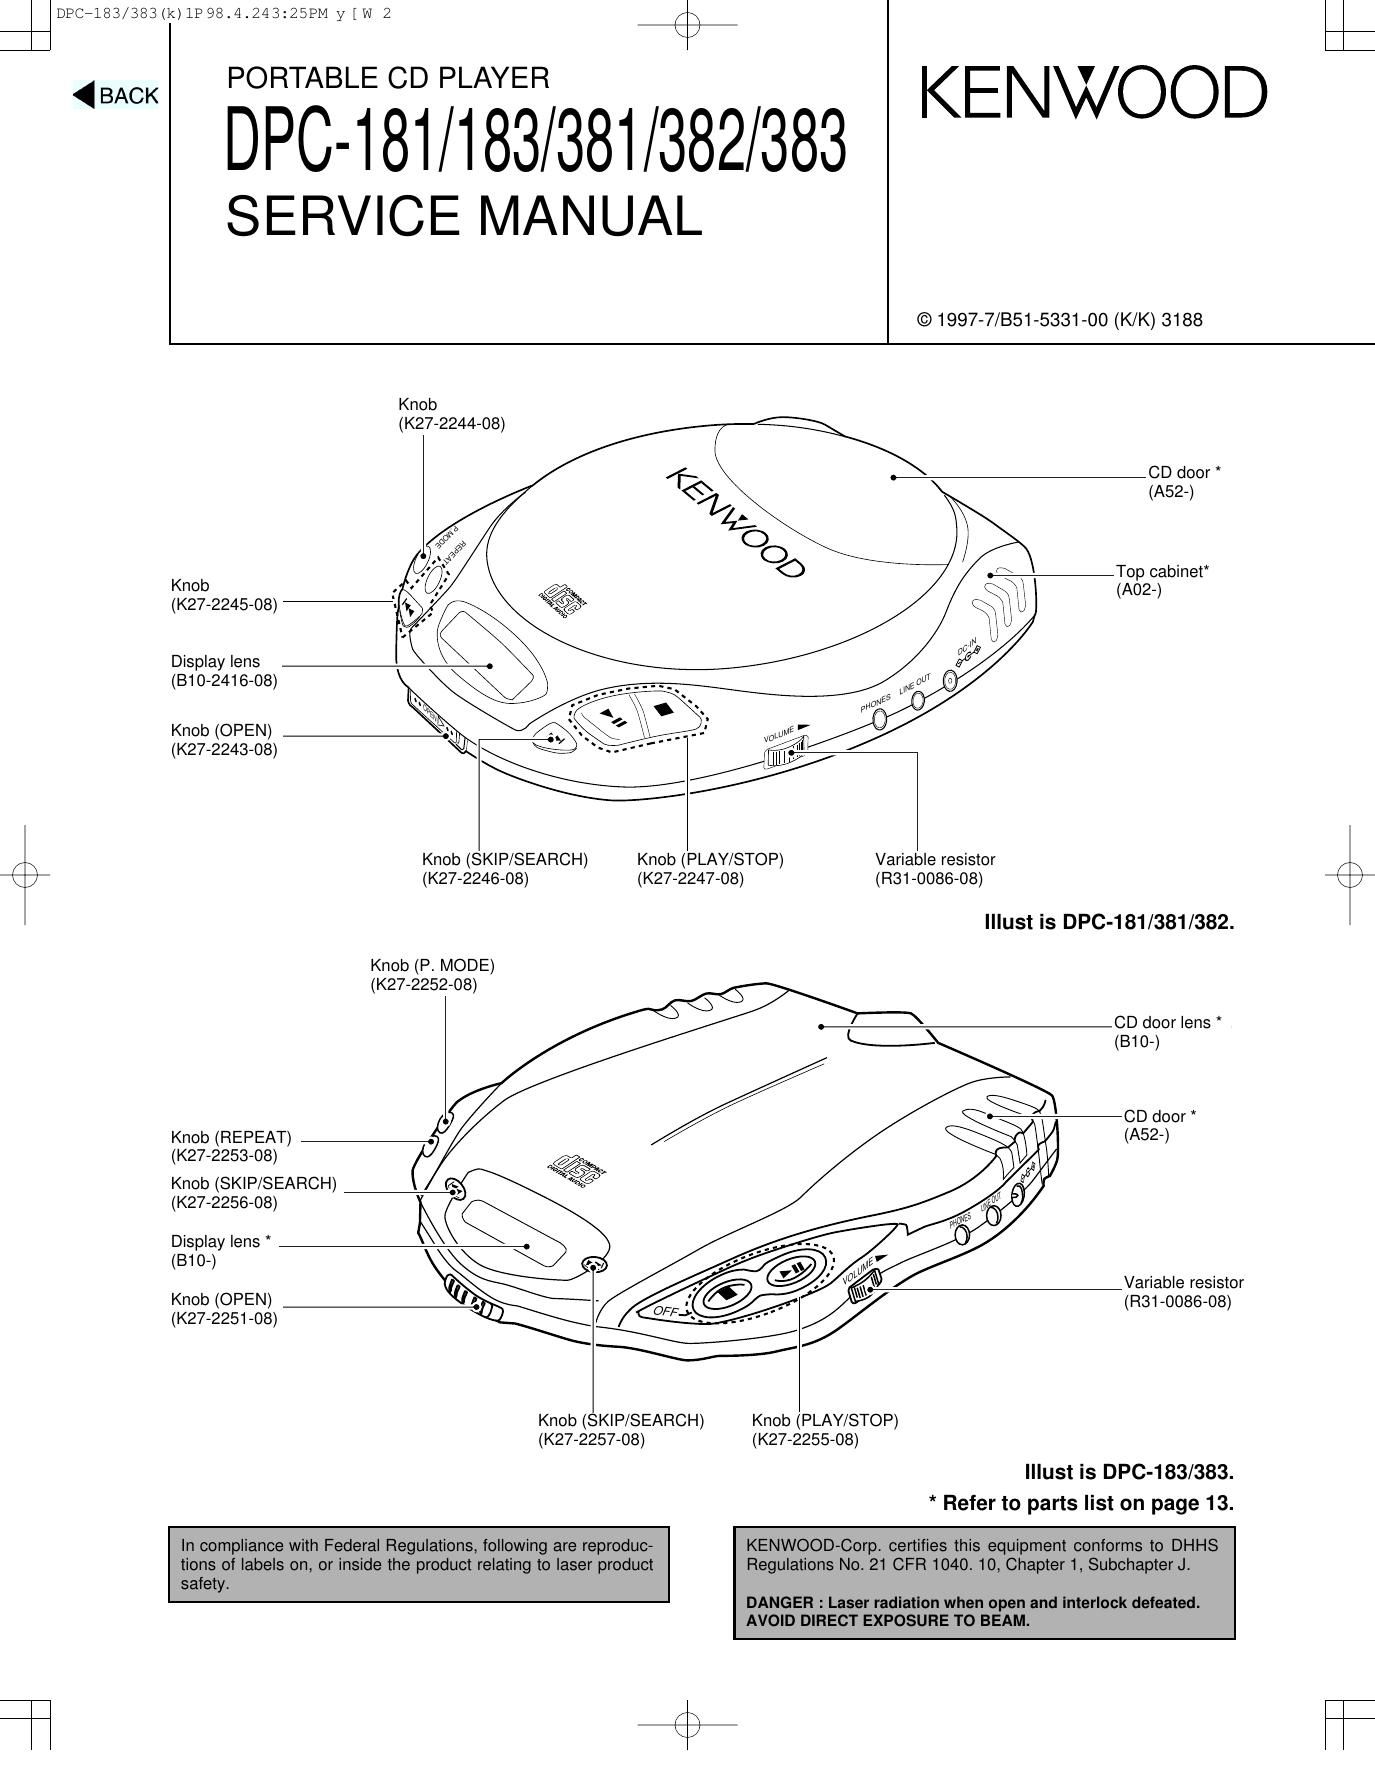 Kenwood DPC 383 Service Manual